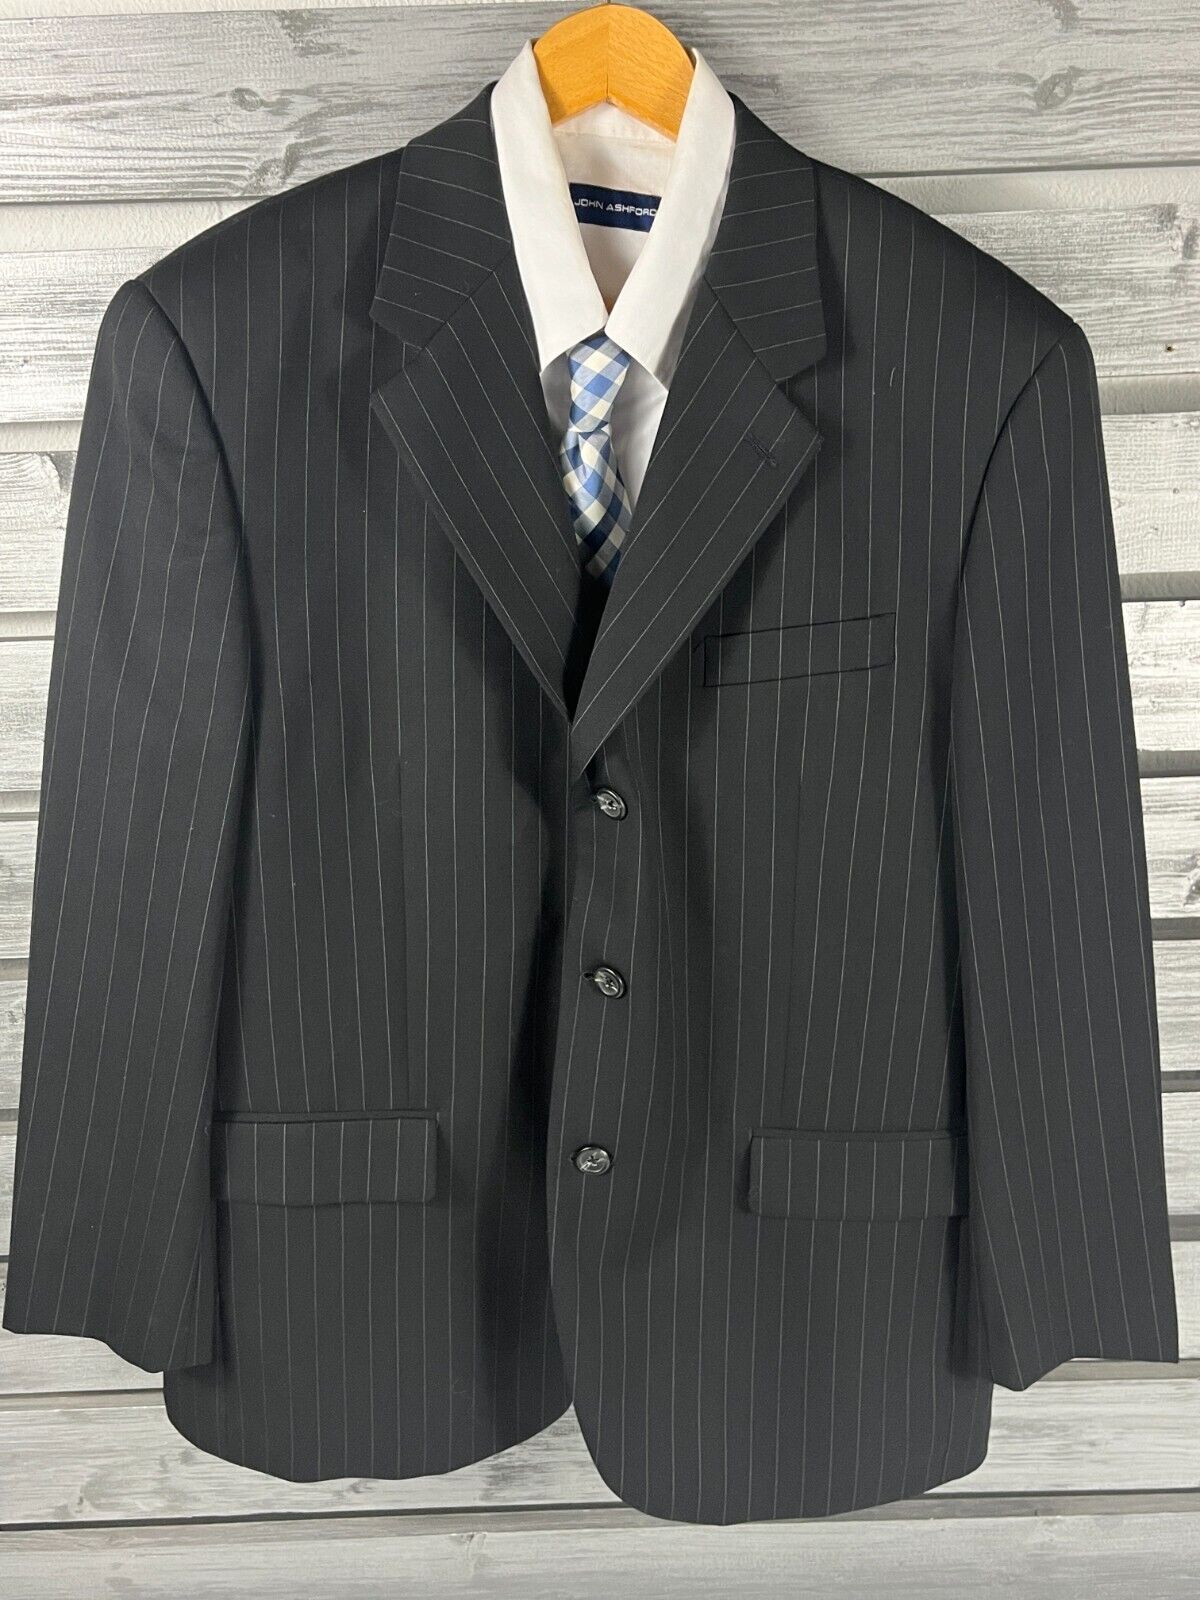 NICE Vtg Ralph Lauren Chaps Black Striped Wool Sport Coat Blazer Jacket Mens 42